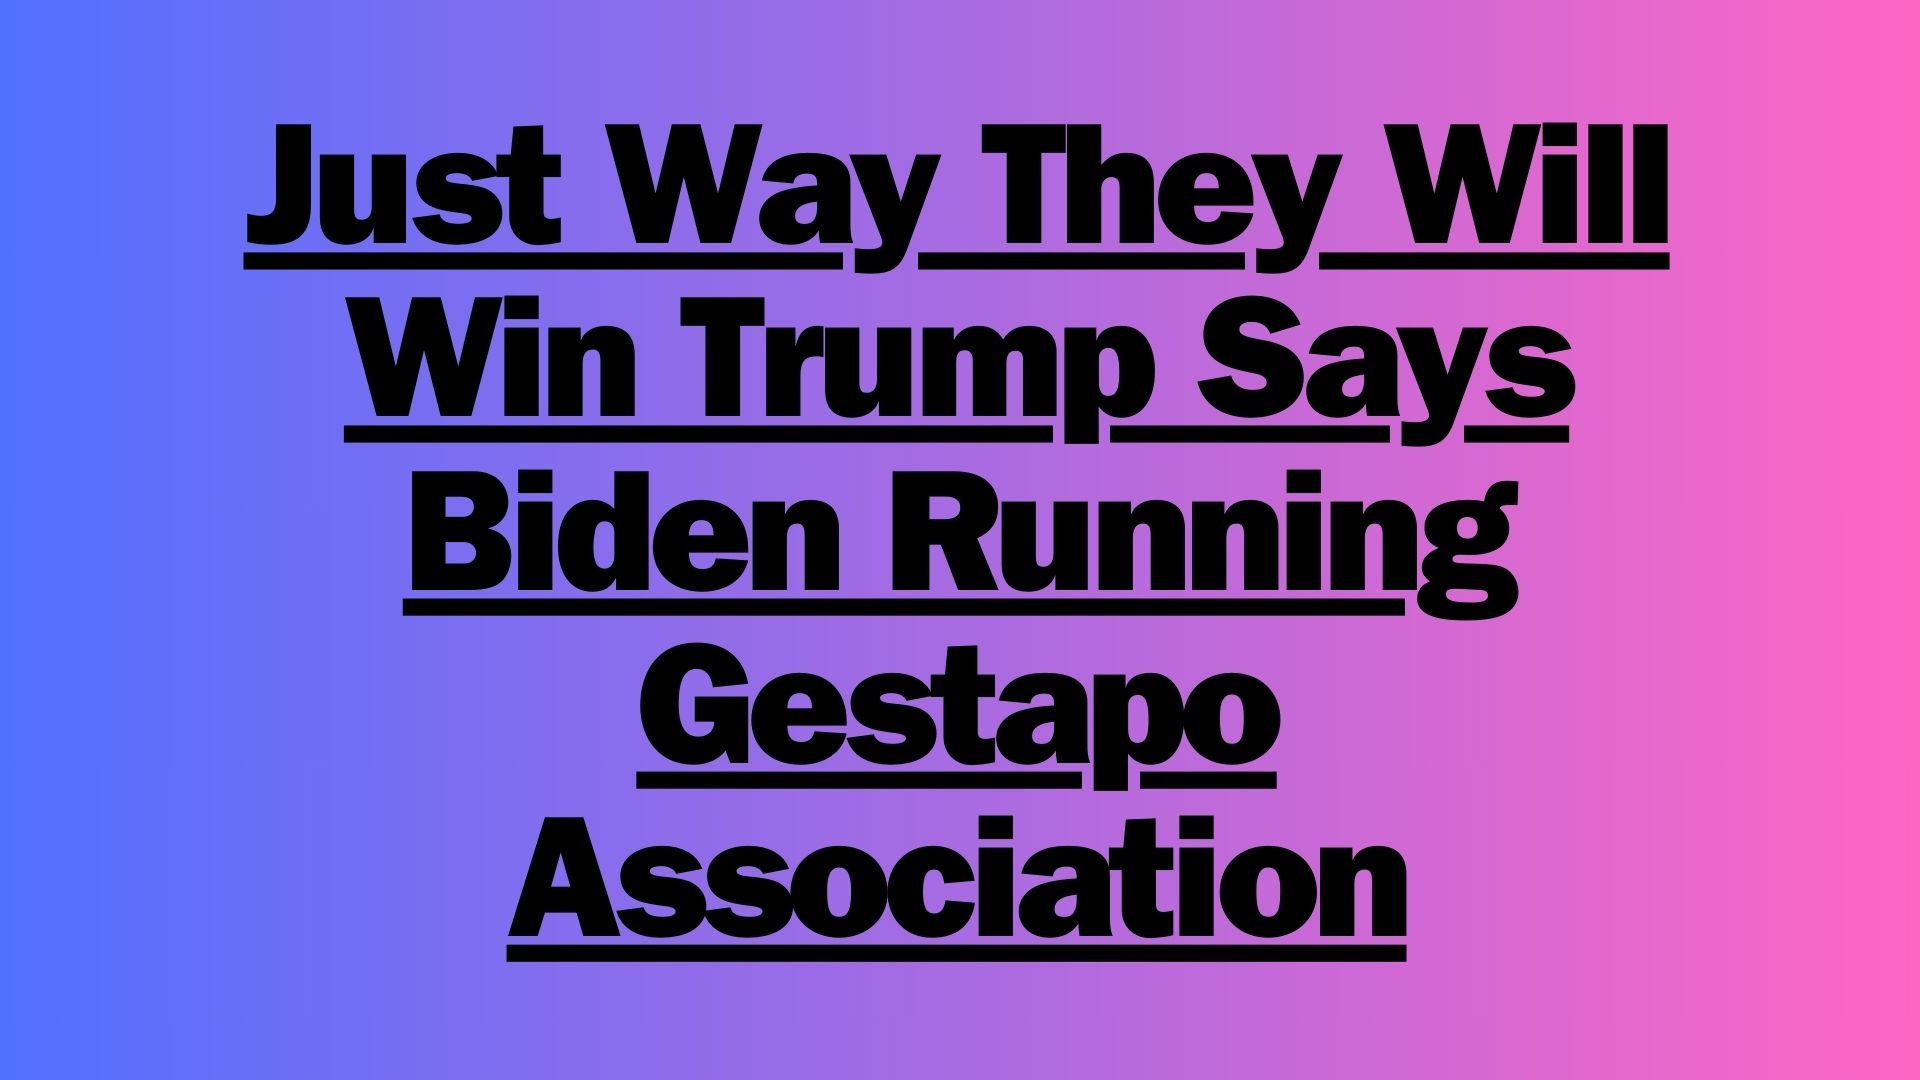 Just Way They Will Win Trump Says Biden Running Gestapo Association